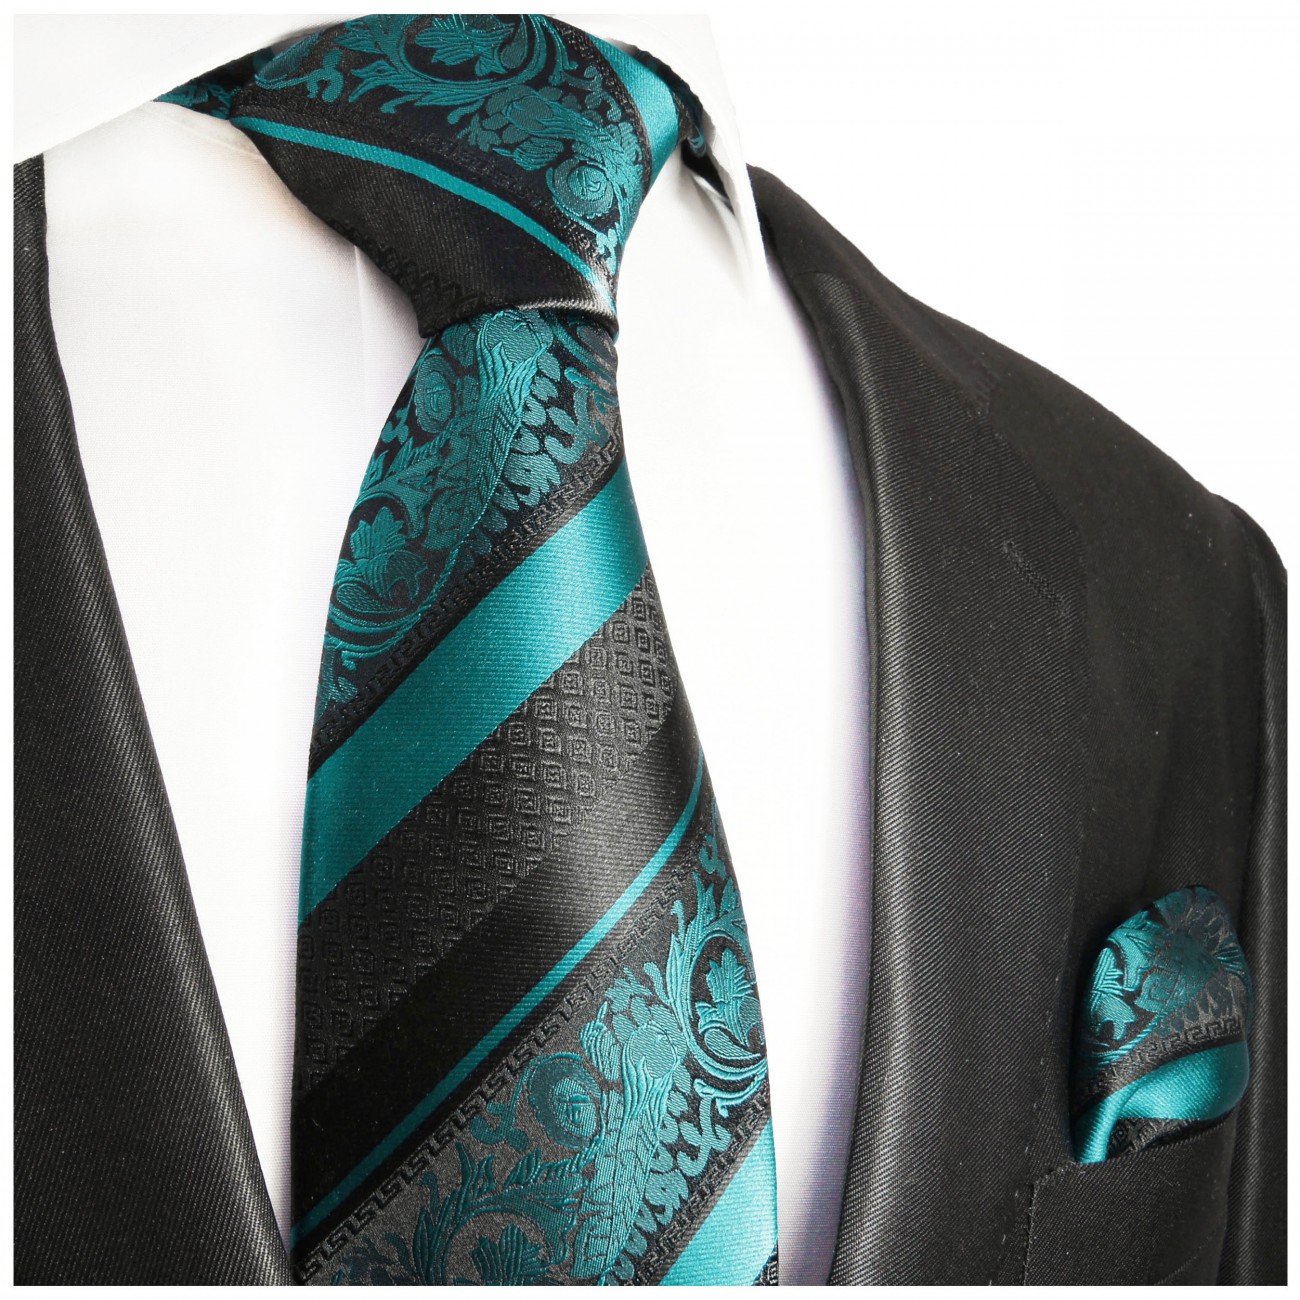 Extra lange Krawatte 165cm - Krawatte blau barock gestreift